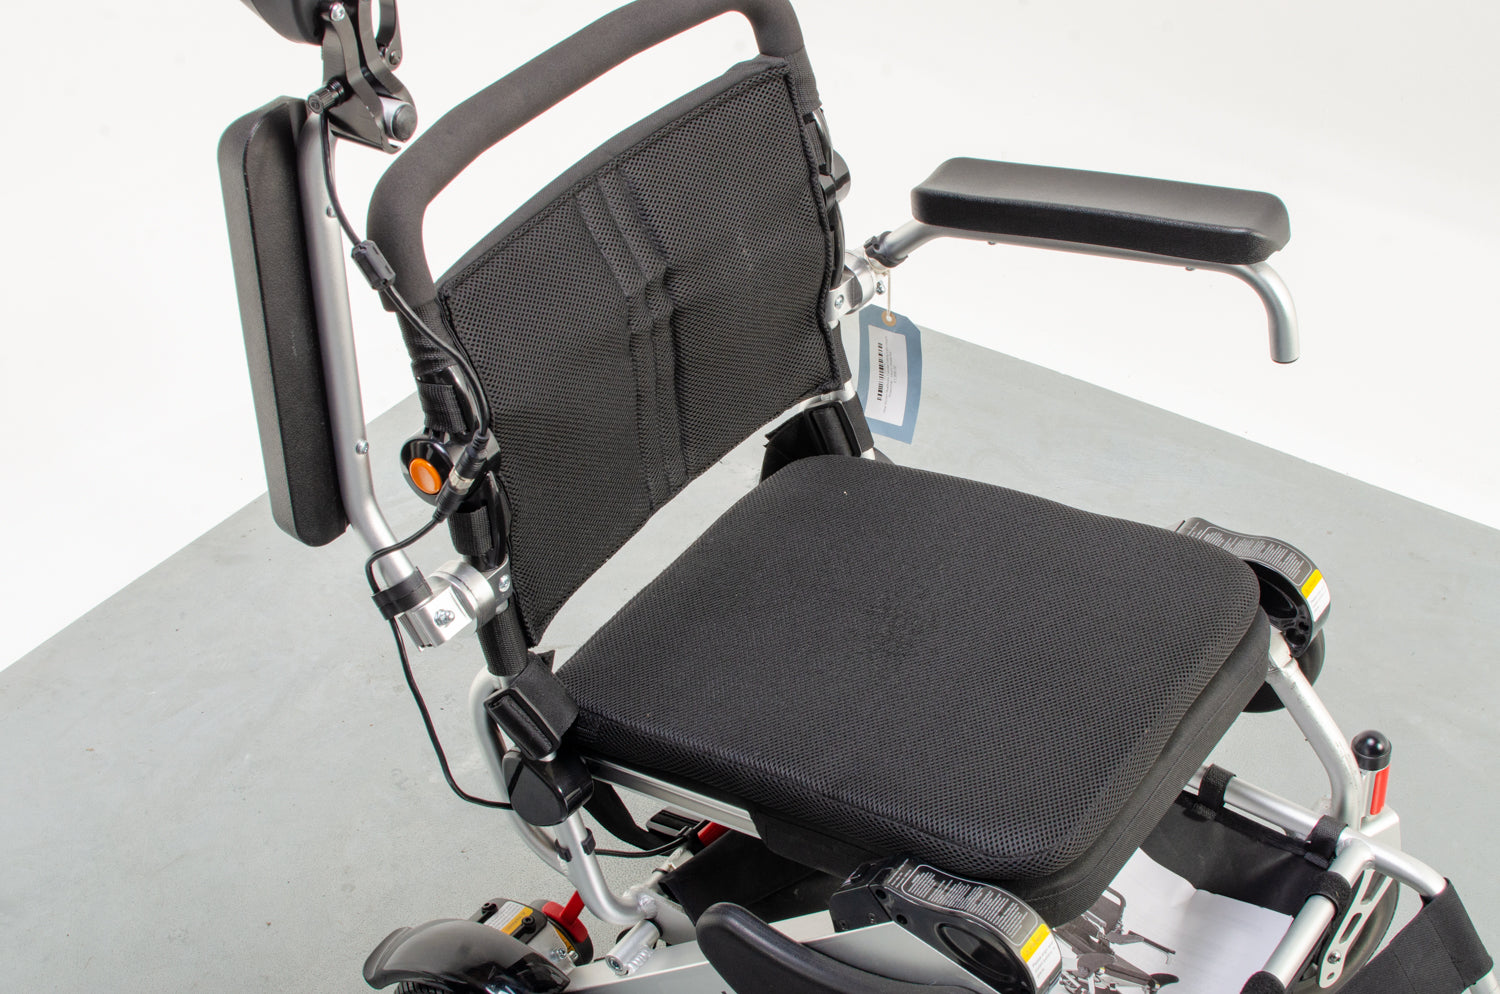 Foldalite Lightweight Lithium Folding Travel Electric Wheelchair Powerchair Motion Healthcare